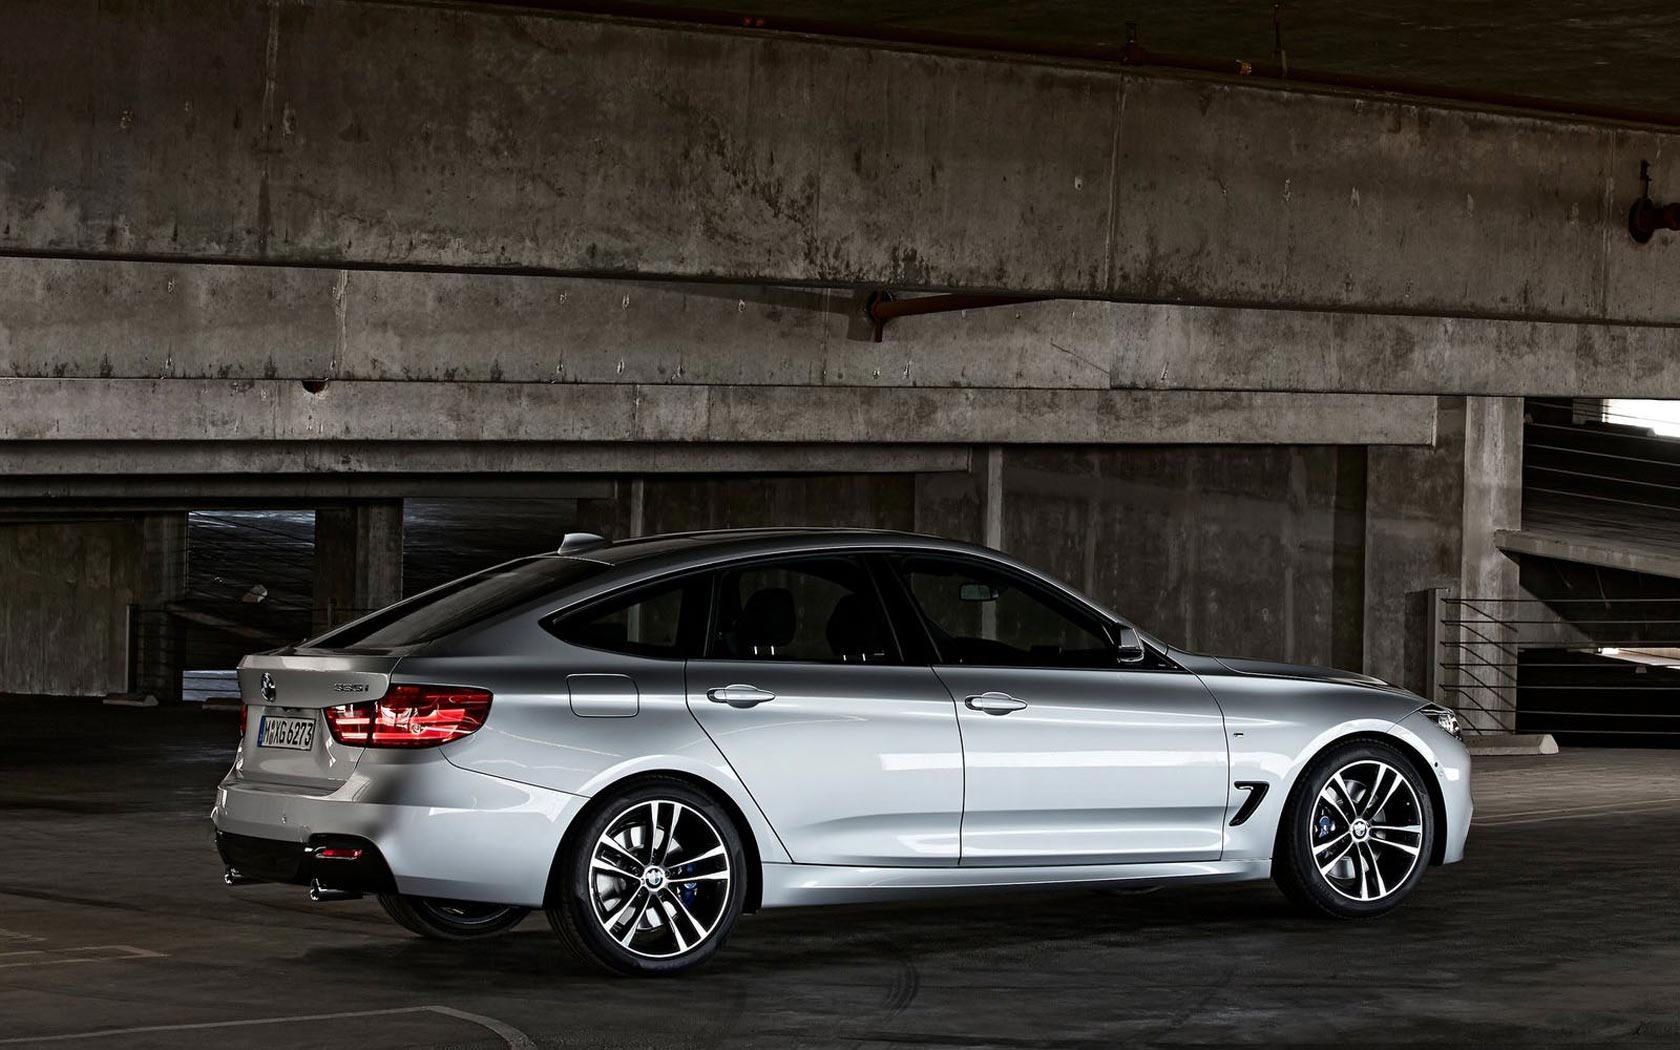  BMW 3-series Gran Turismo (2013-2015)